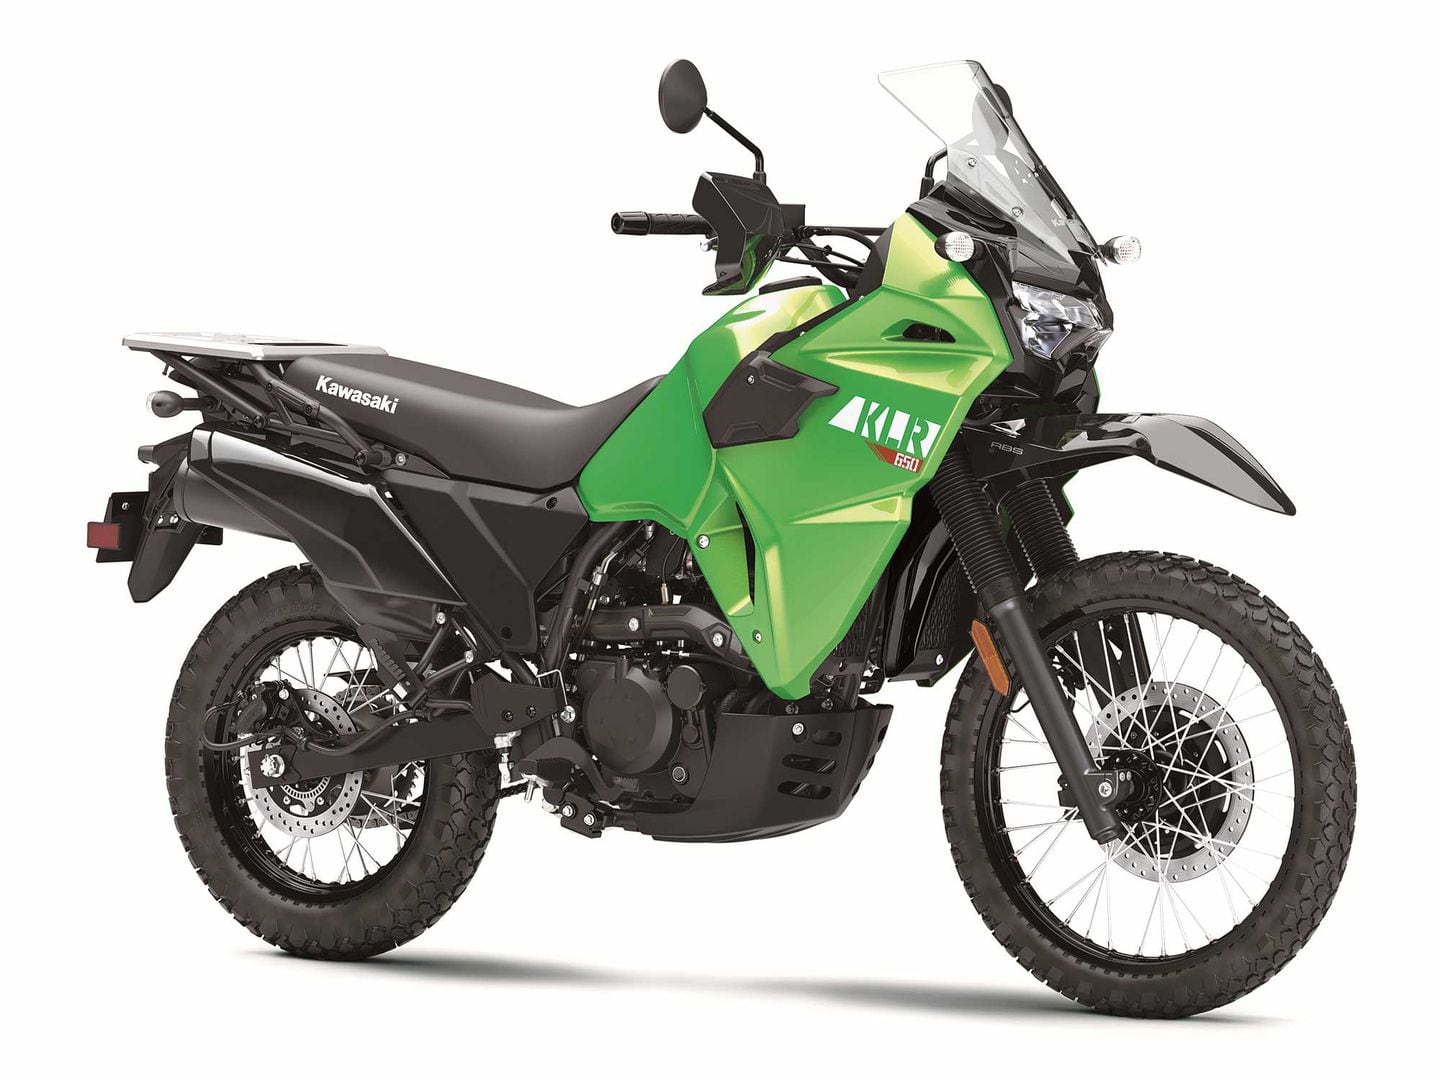 2023 Kawasaki KLR650 First Look Preview Motorcyclist